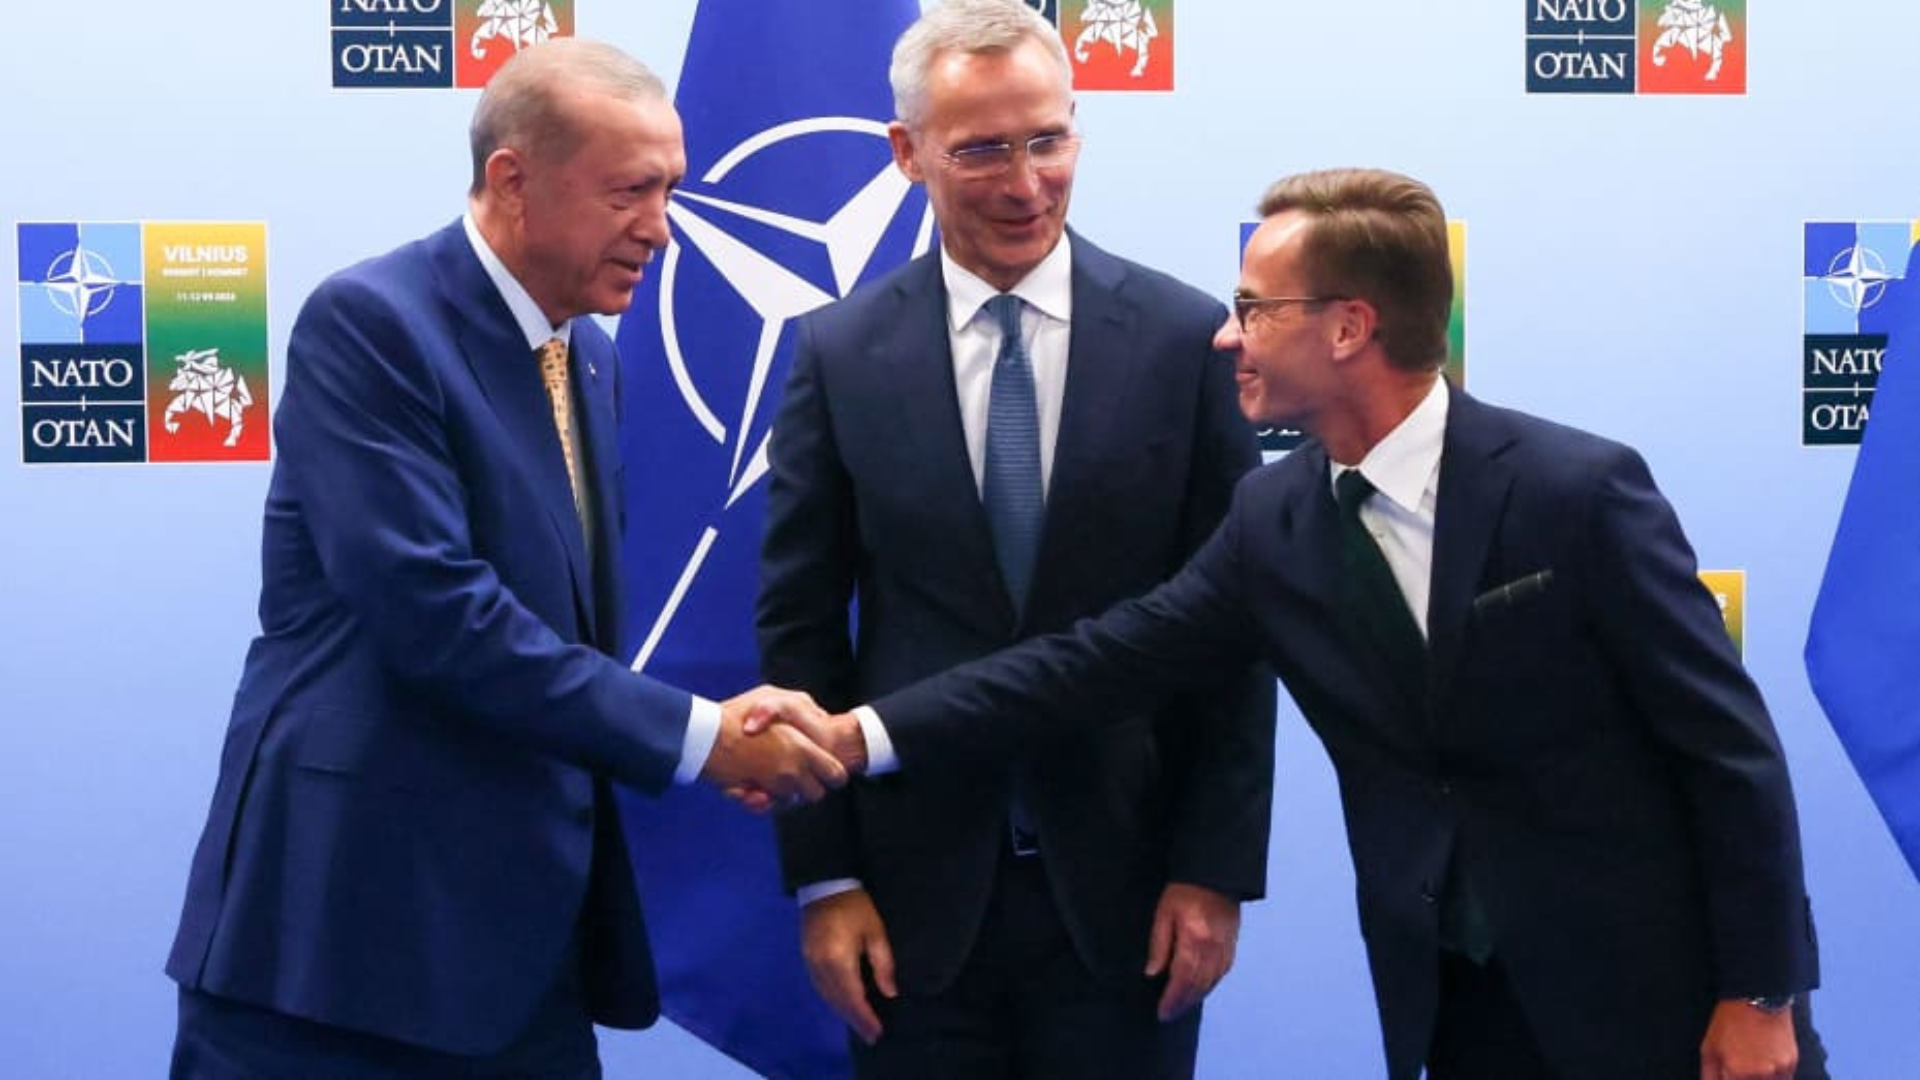 Turkey’s Parliament Approves Sweden’s NATO Membership Bid